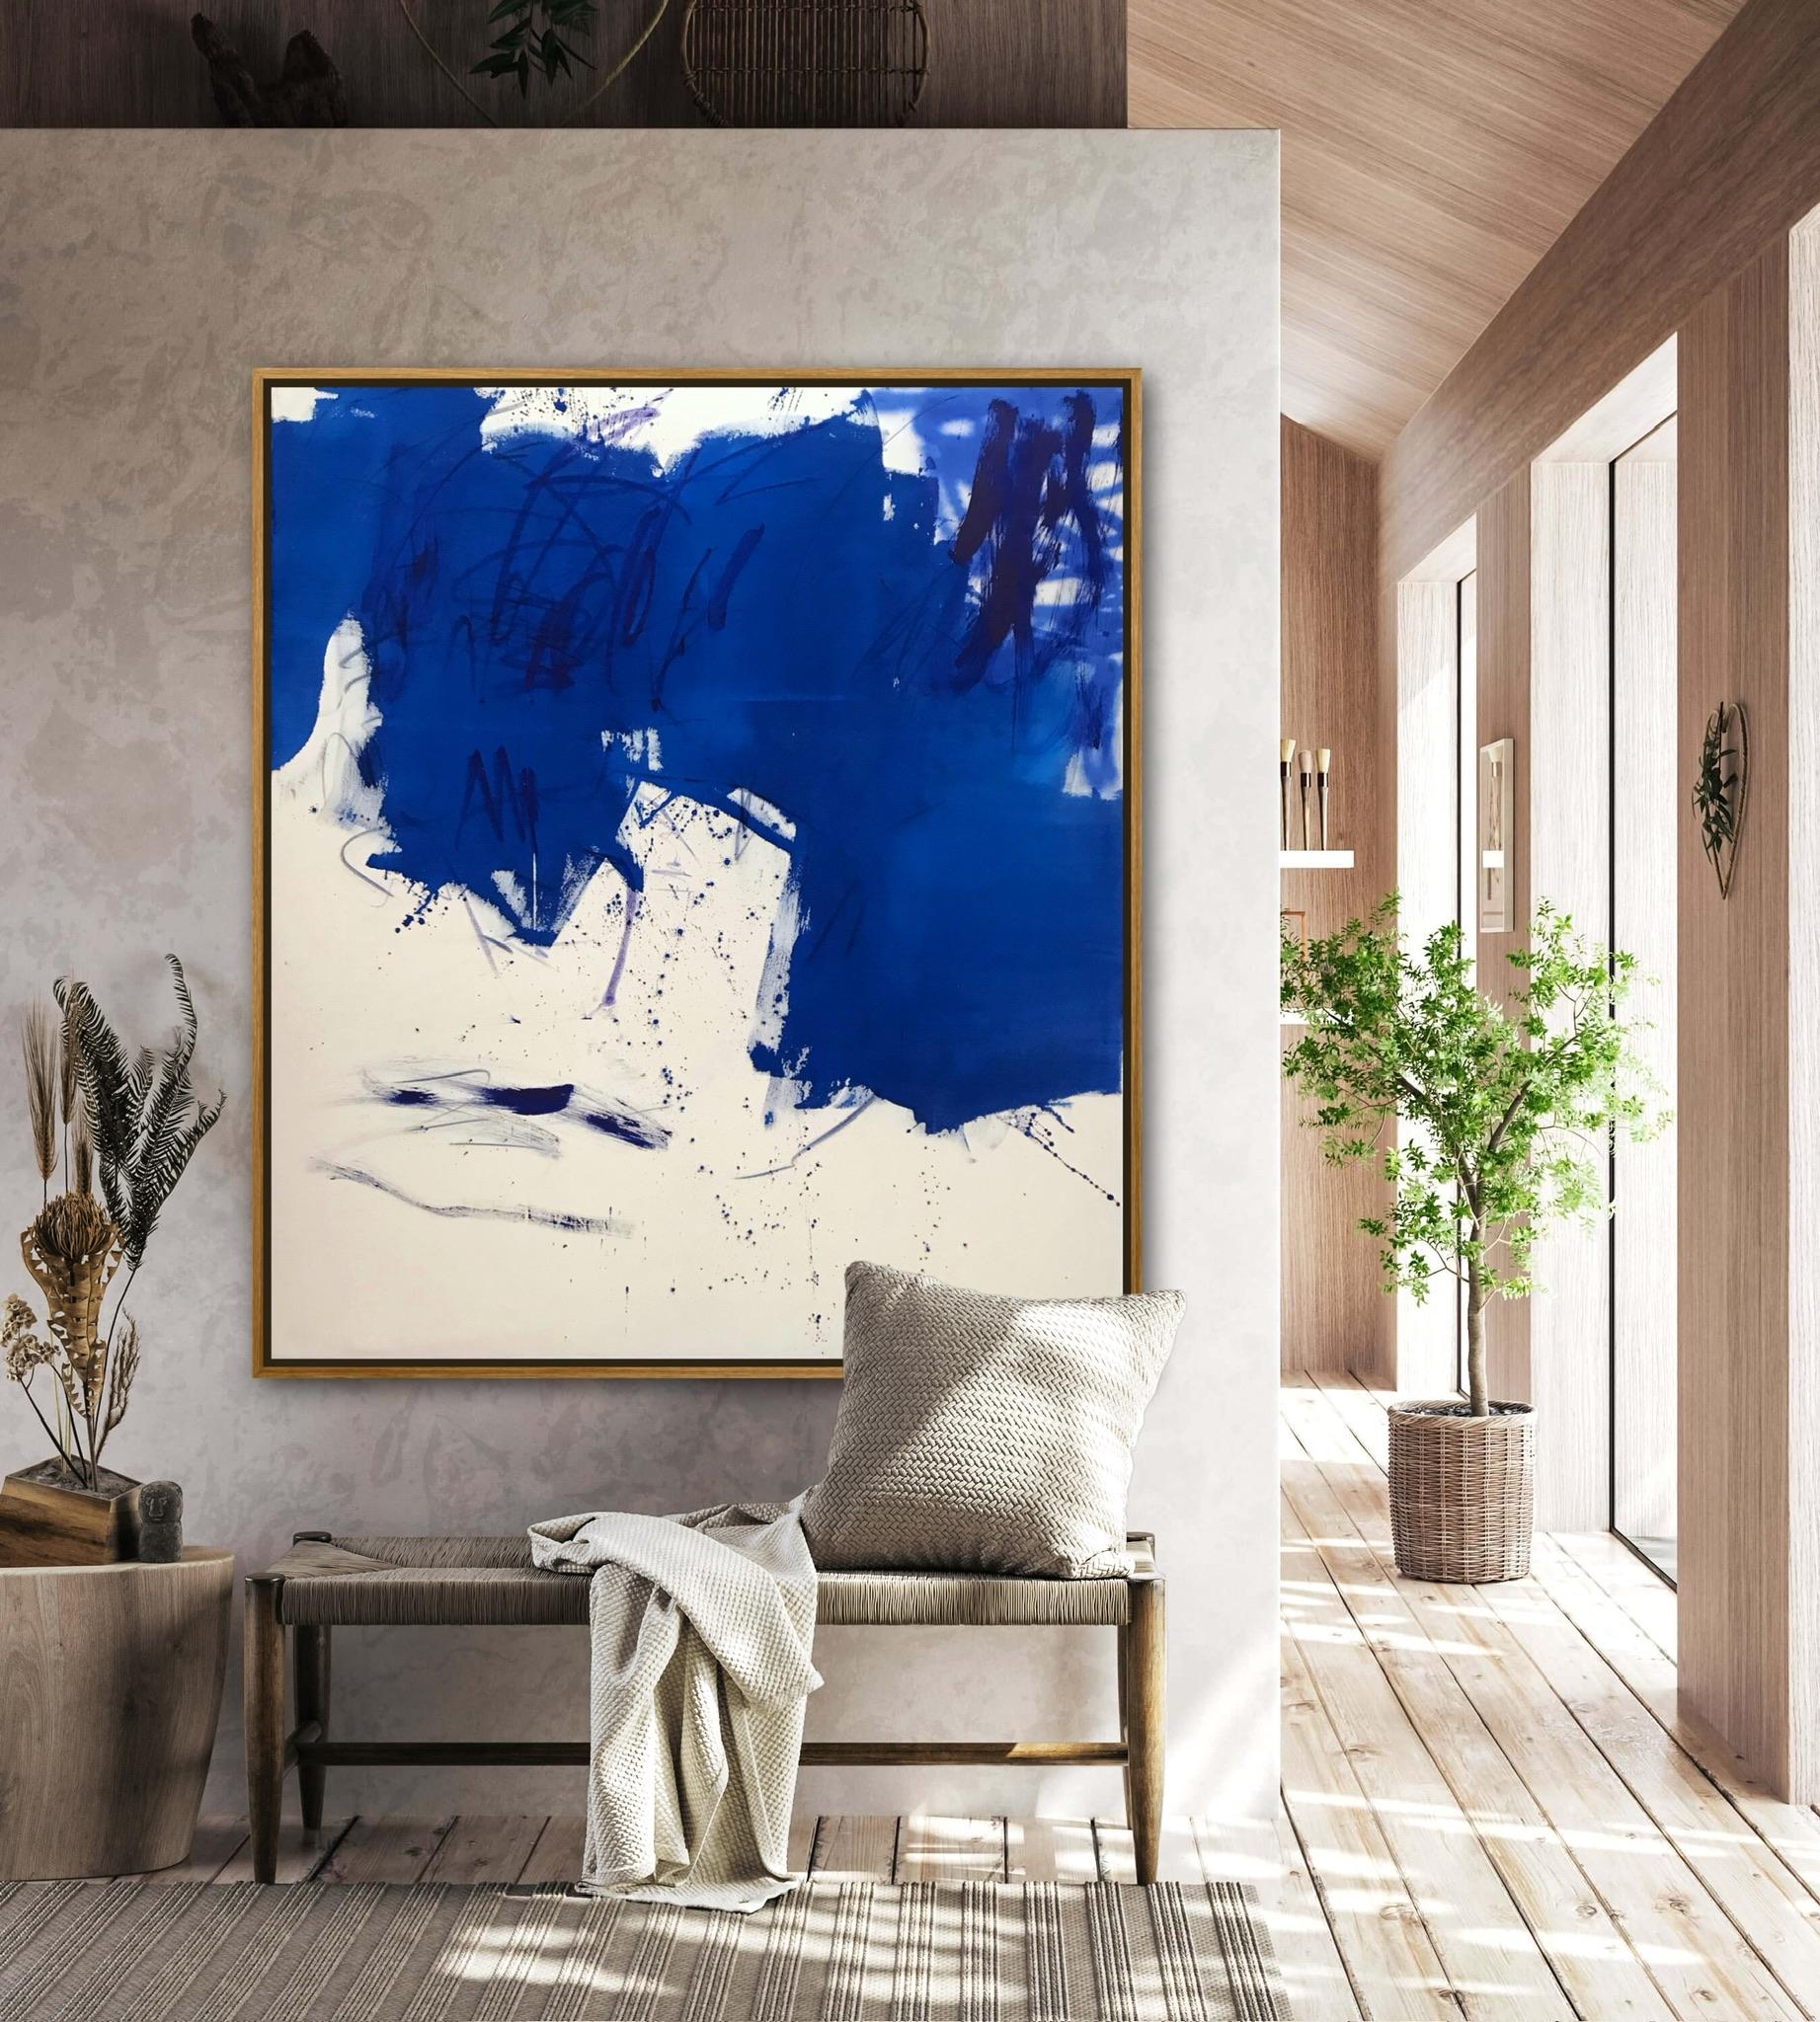 Azur et mer (peinture abstraite) - Painting de Manuela Karin Knaut